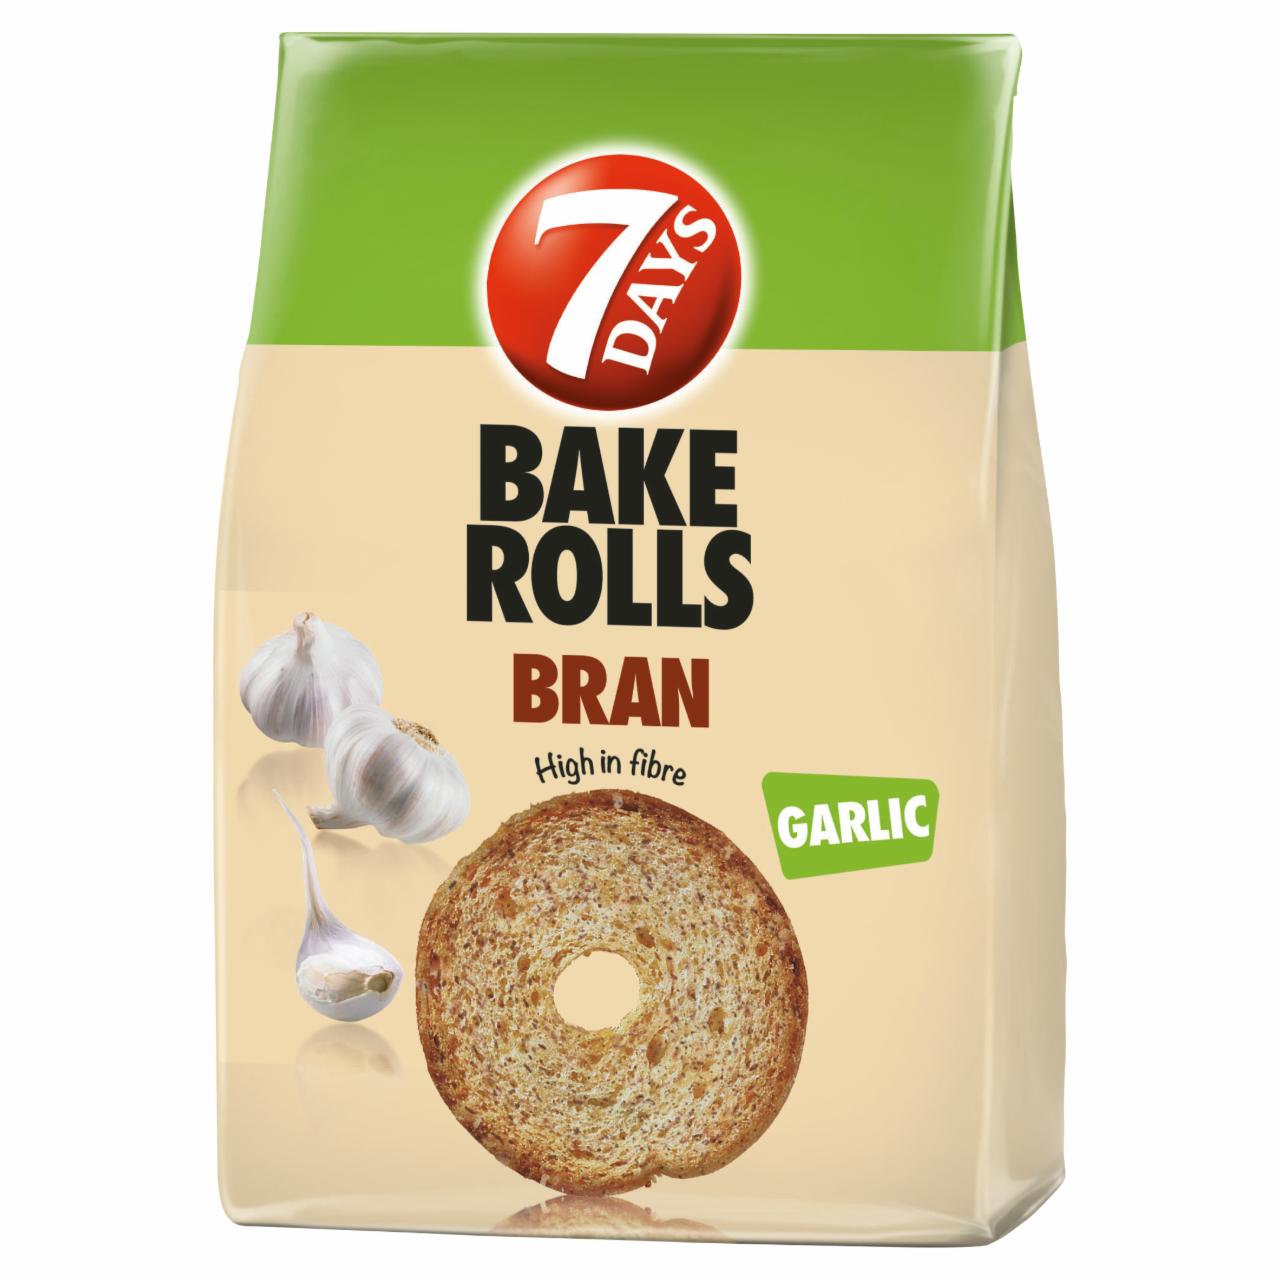 Fotografie - Bake Rolls Bran High in fibre Garlic 7 Days